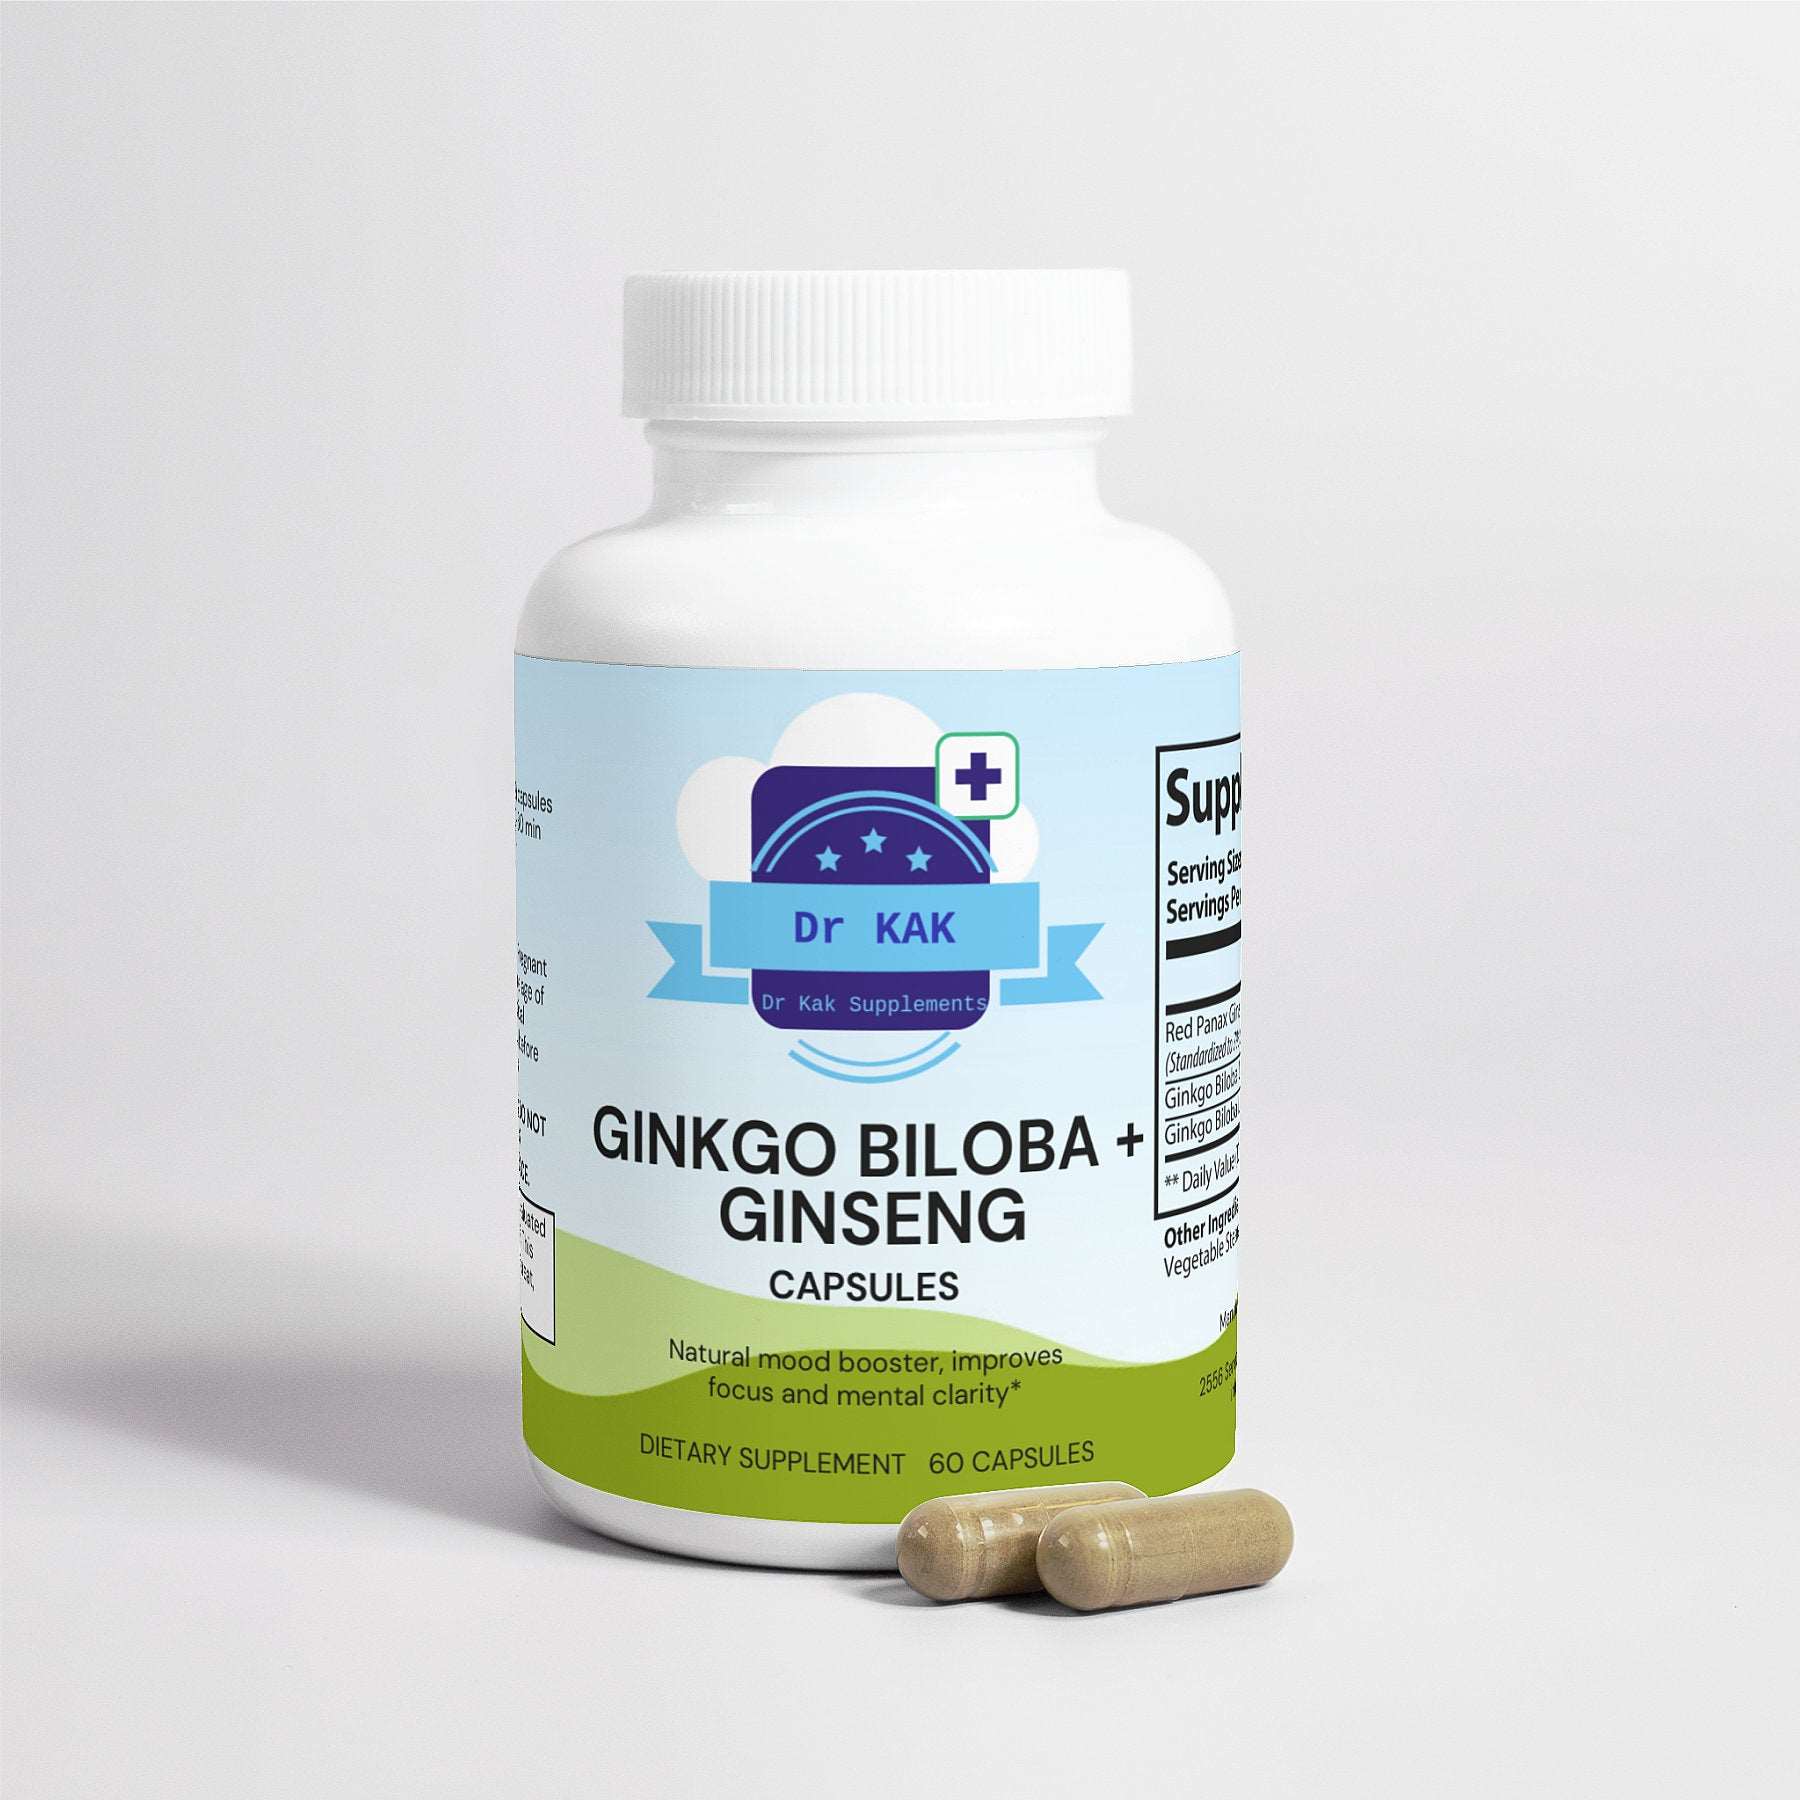 Ginkgo Biloba + Ginseng